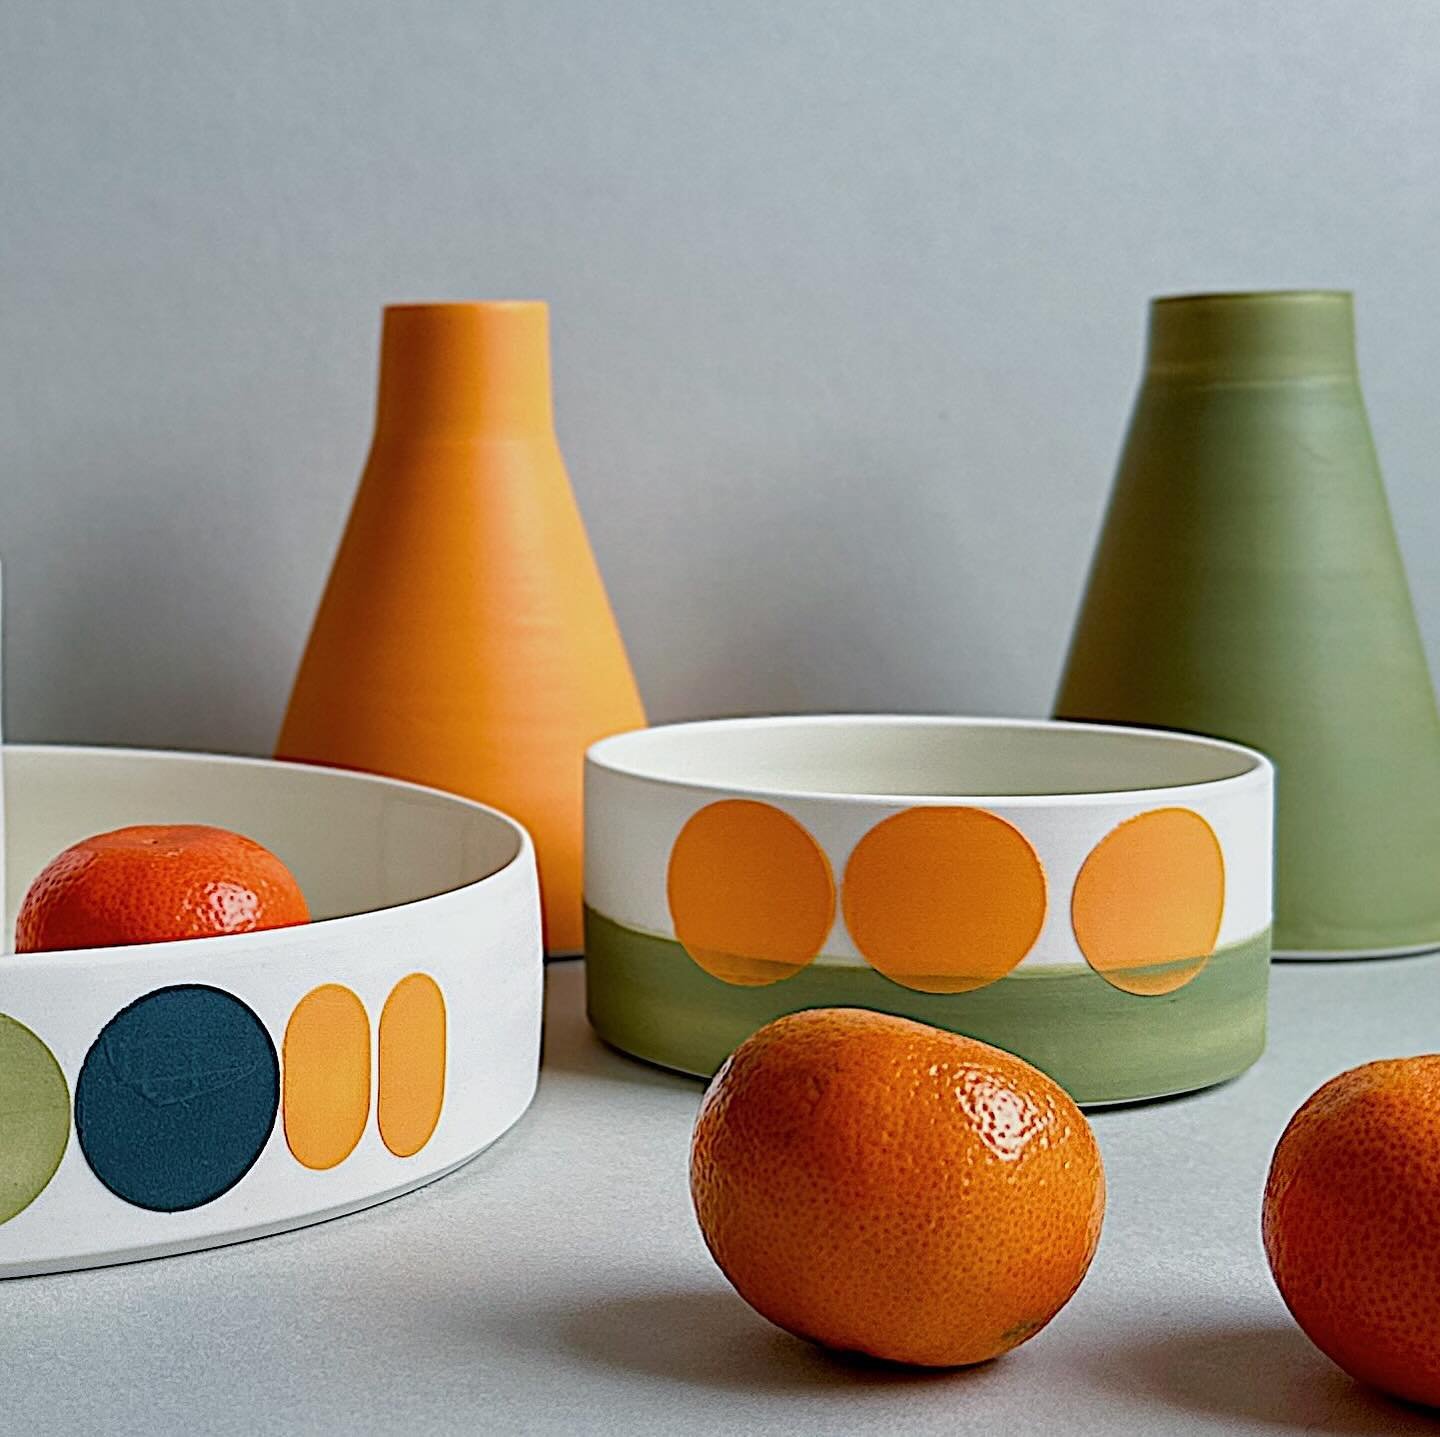 Orange 🍊 and olive 🫒 
.
.
.
.
#handmade #wheelthrown #porcelain #pottery #slipware #bythelinepottery #porcelainpottery #modernceramics #studiopotter #maker #contemporaryceramics #madeinlondon #ceramics #craft #ceramicdesign